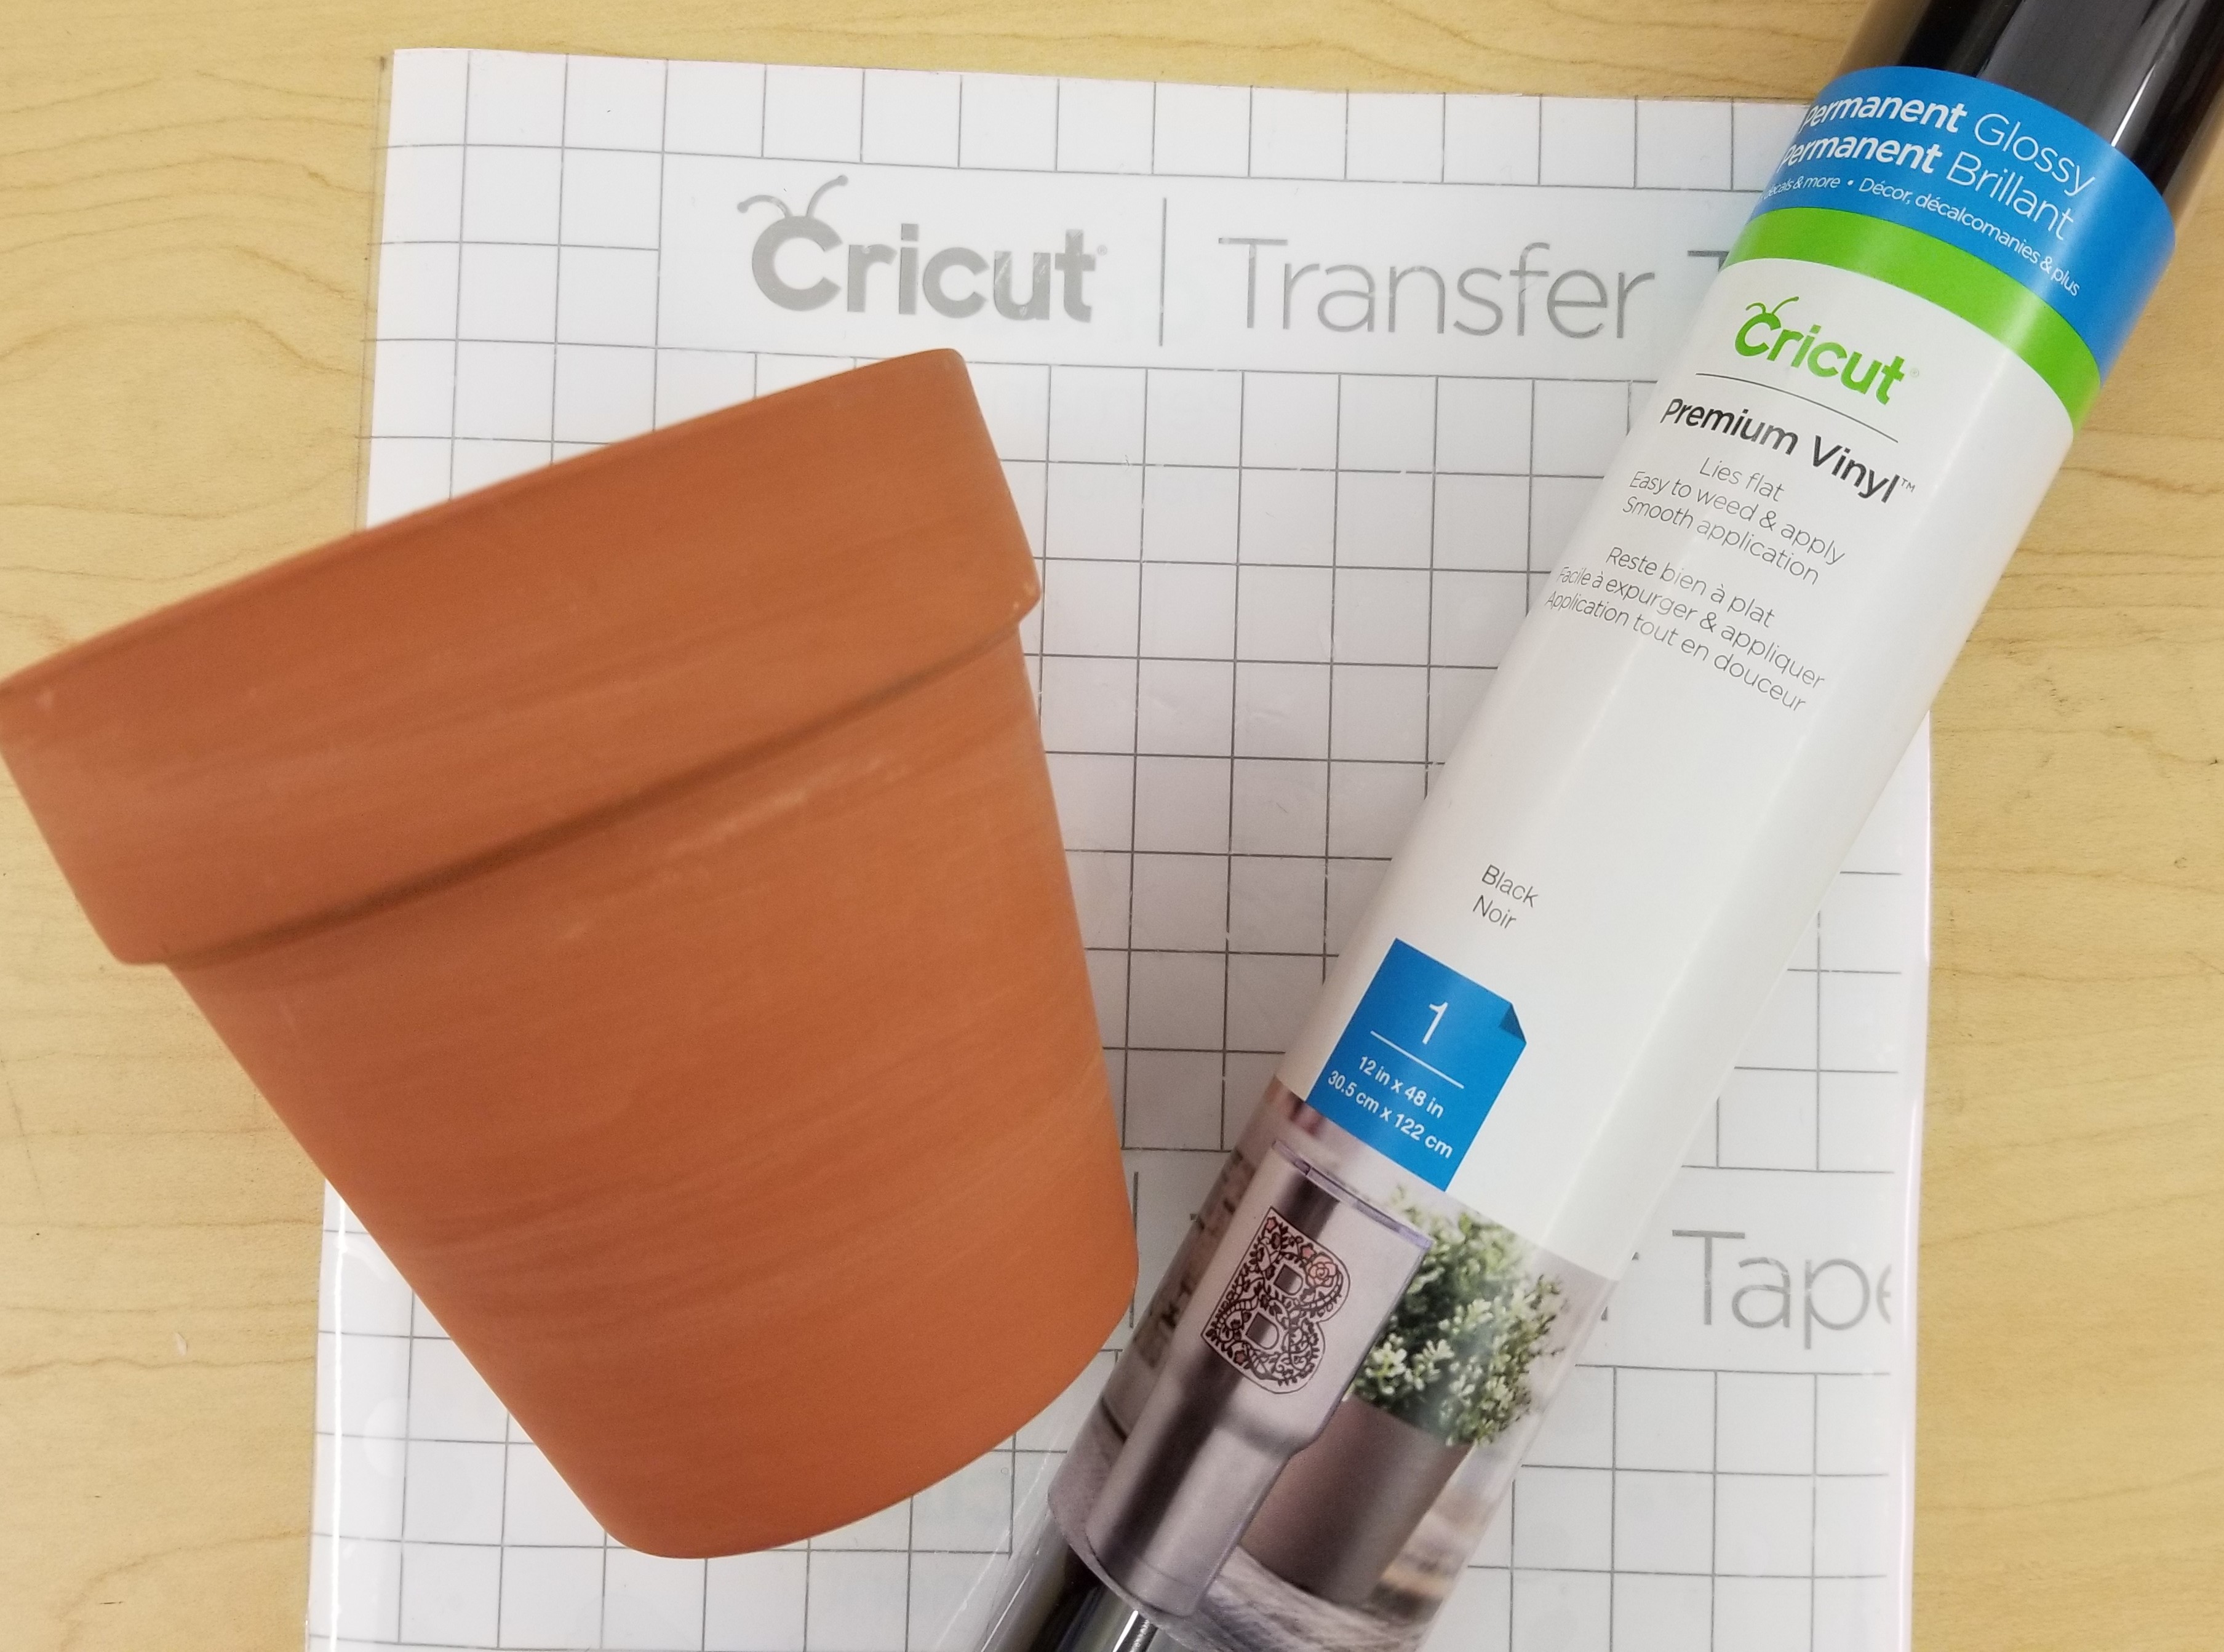 terracotta planter, Cricut transfer tape, Cricut premium vinyl